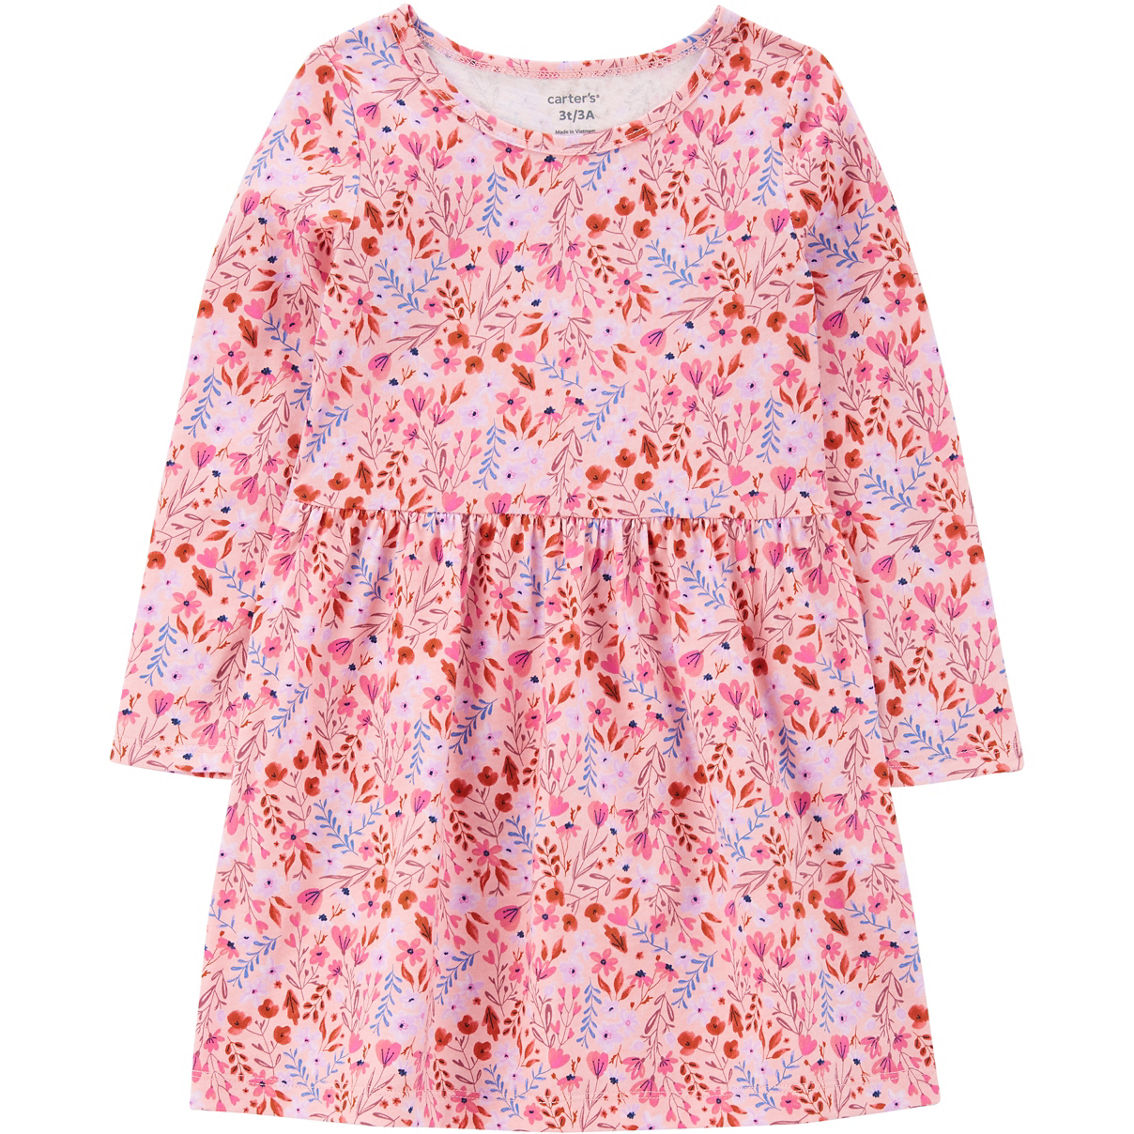 Carter's Toddler Girls Pink Floral Jersey Dress | Toddler Girls 2t-5t ...